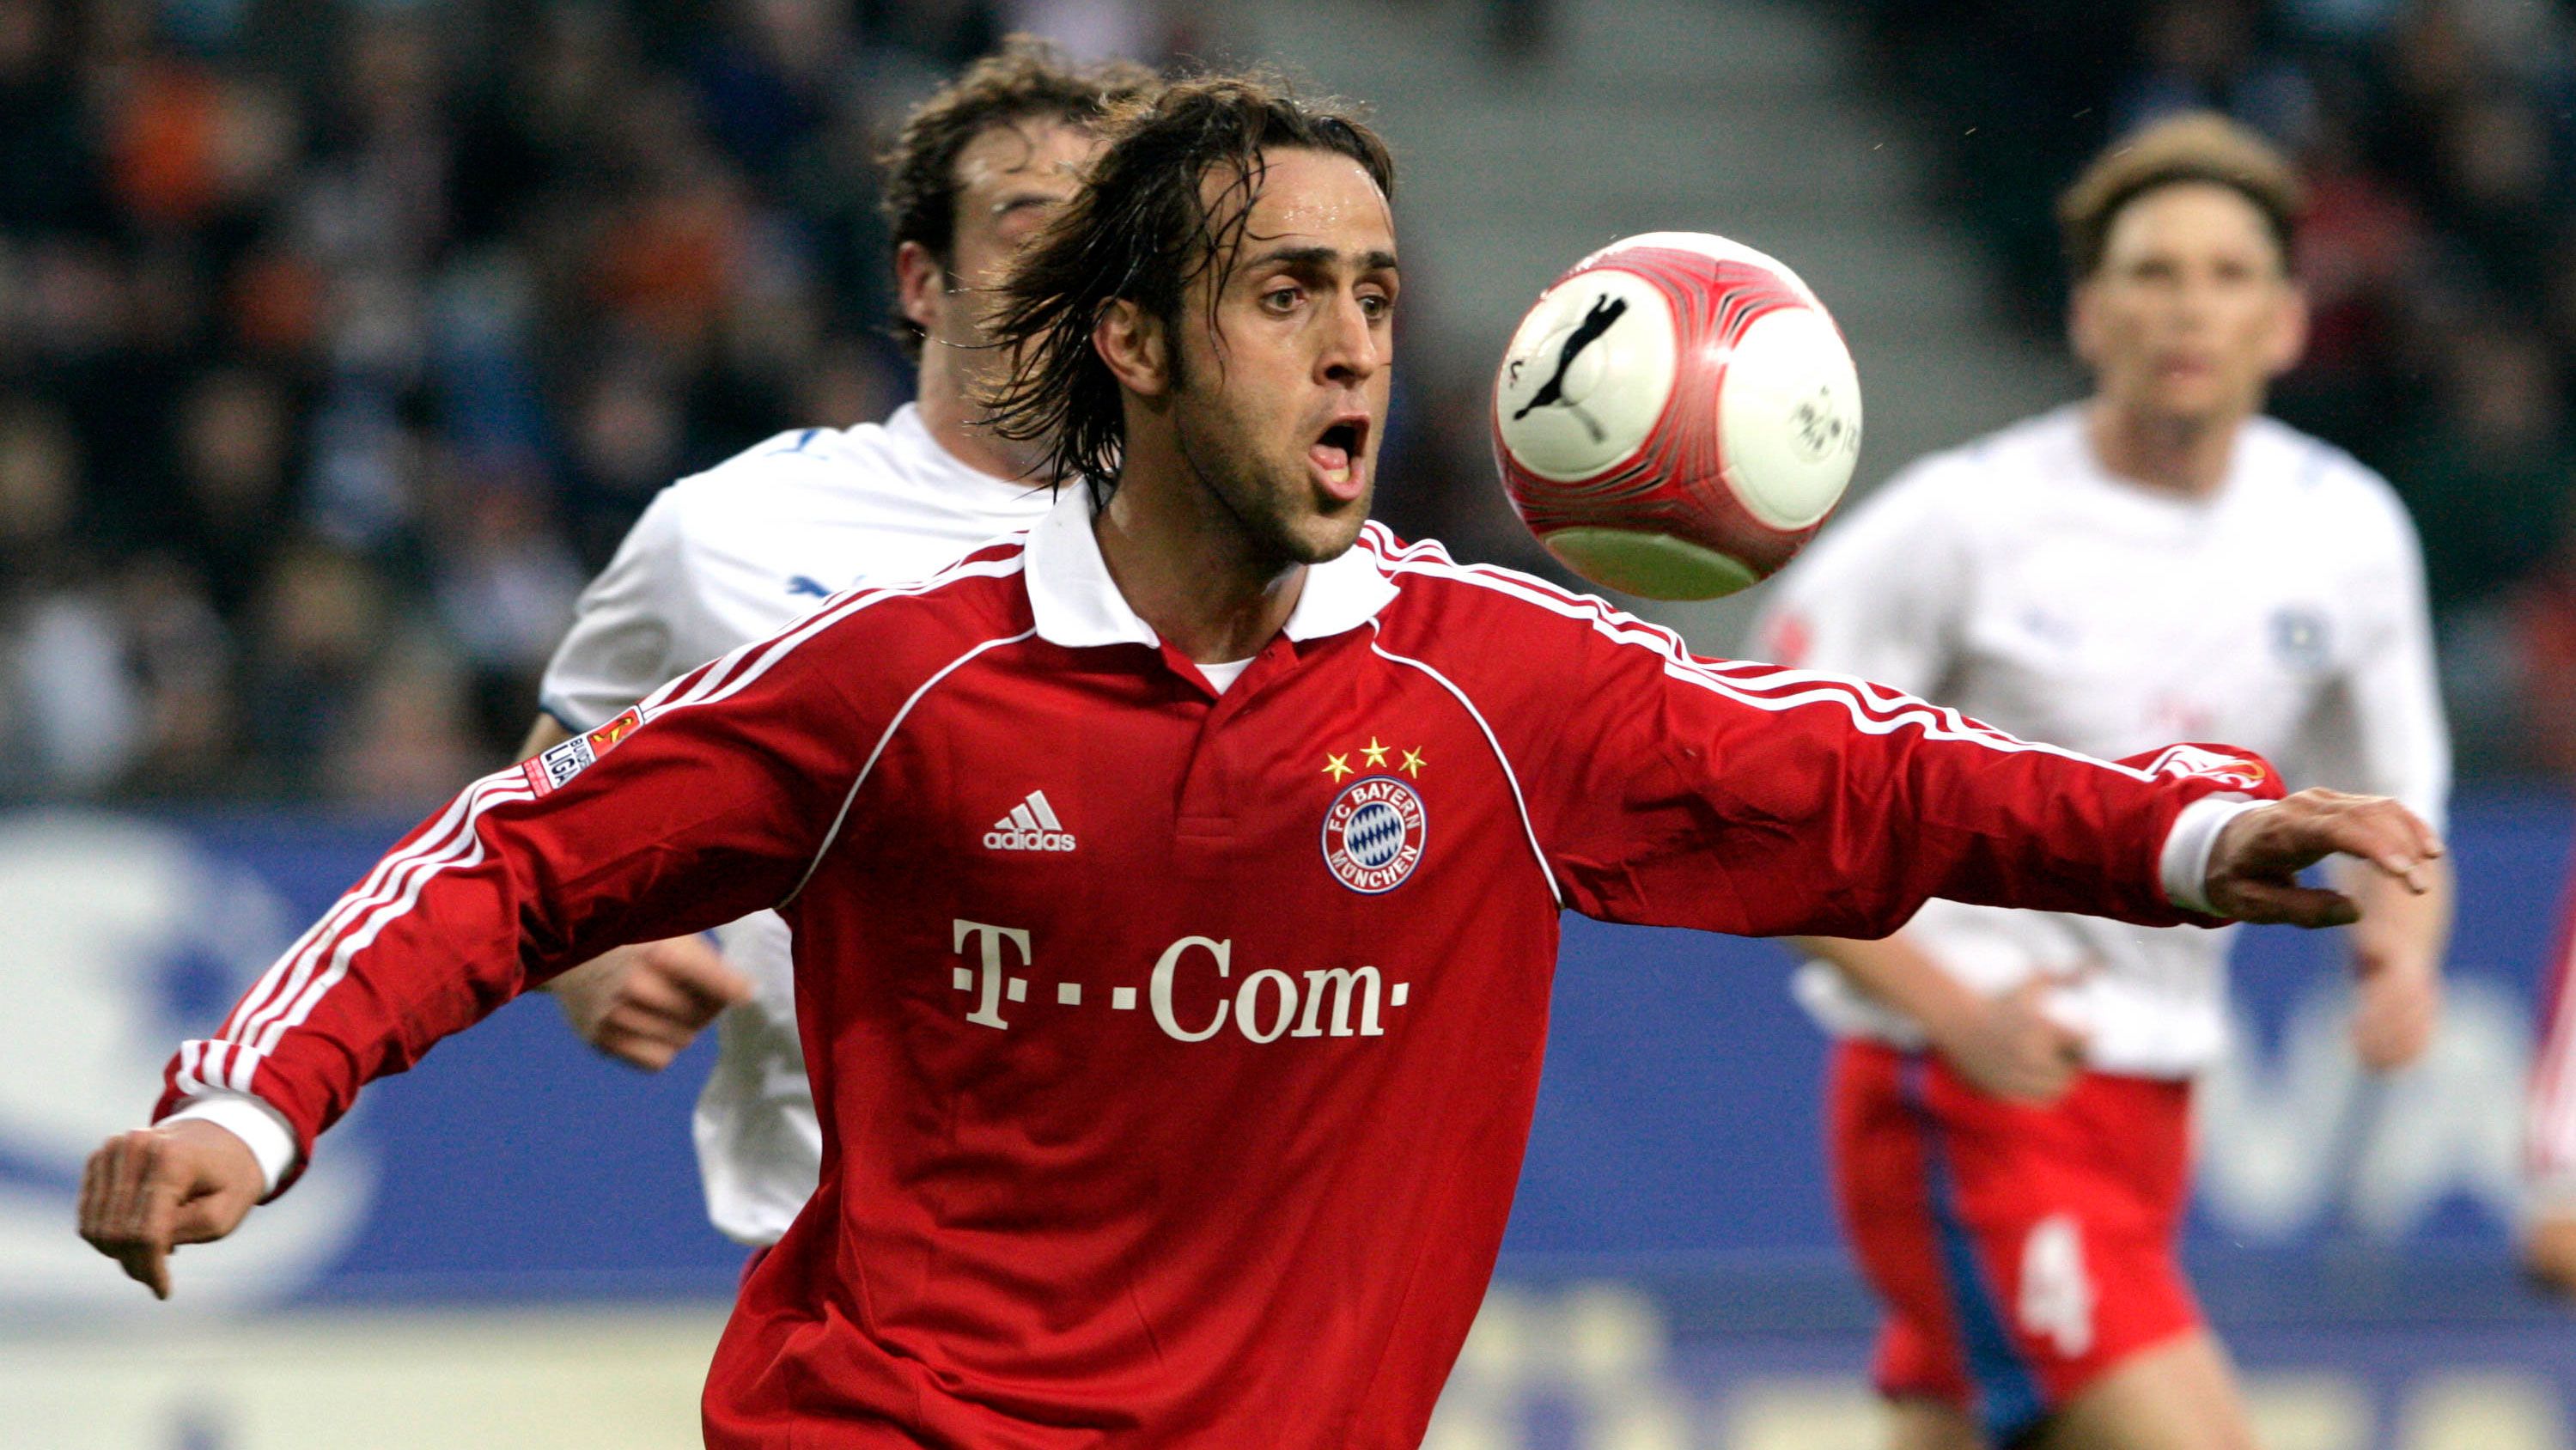  Ali Karimi, playing for Bayern Munich, fixes the ball during a friendly match between Hamburger SV and Bayern on January 20, 2007. 